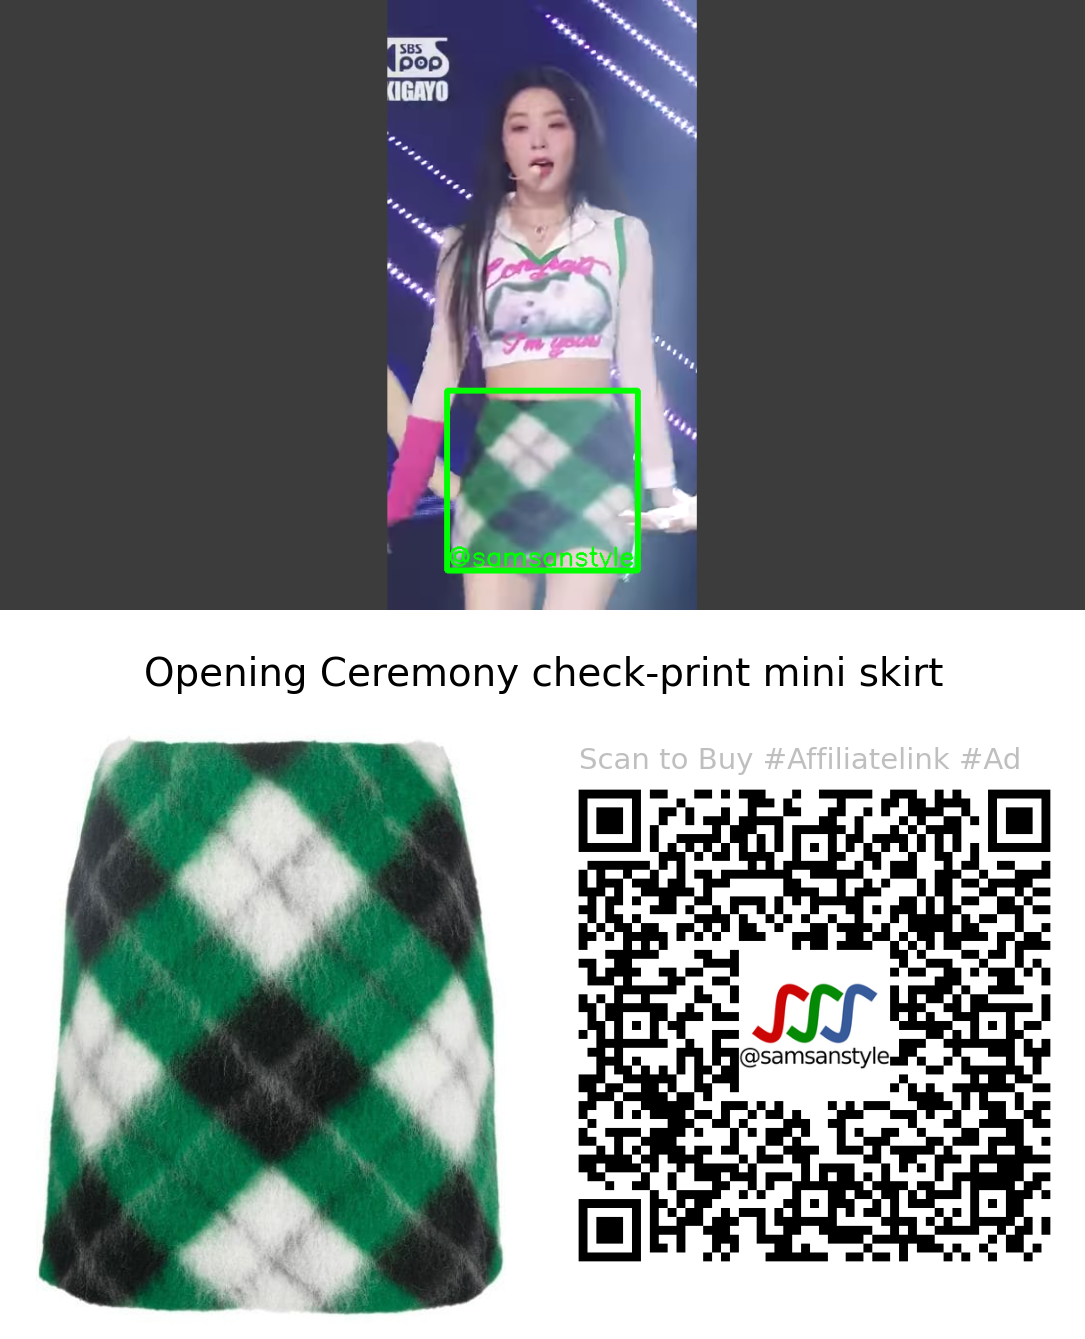 Red Velvet Irene | Birthday SBS Inkigayo | Opening Ceremony check-print mini skirt